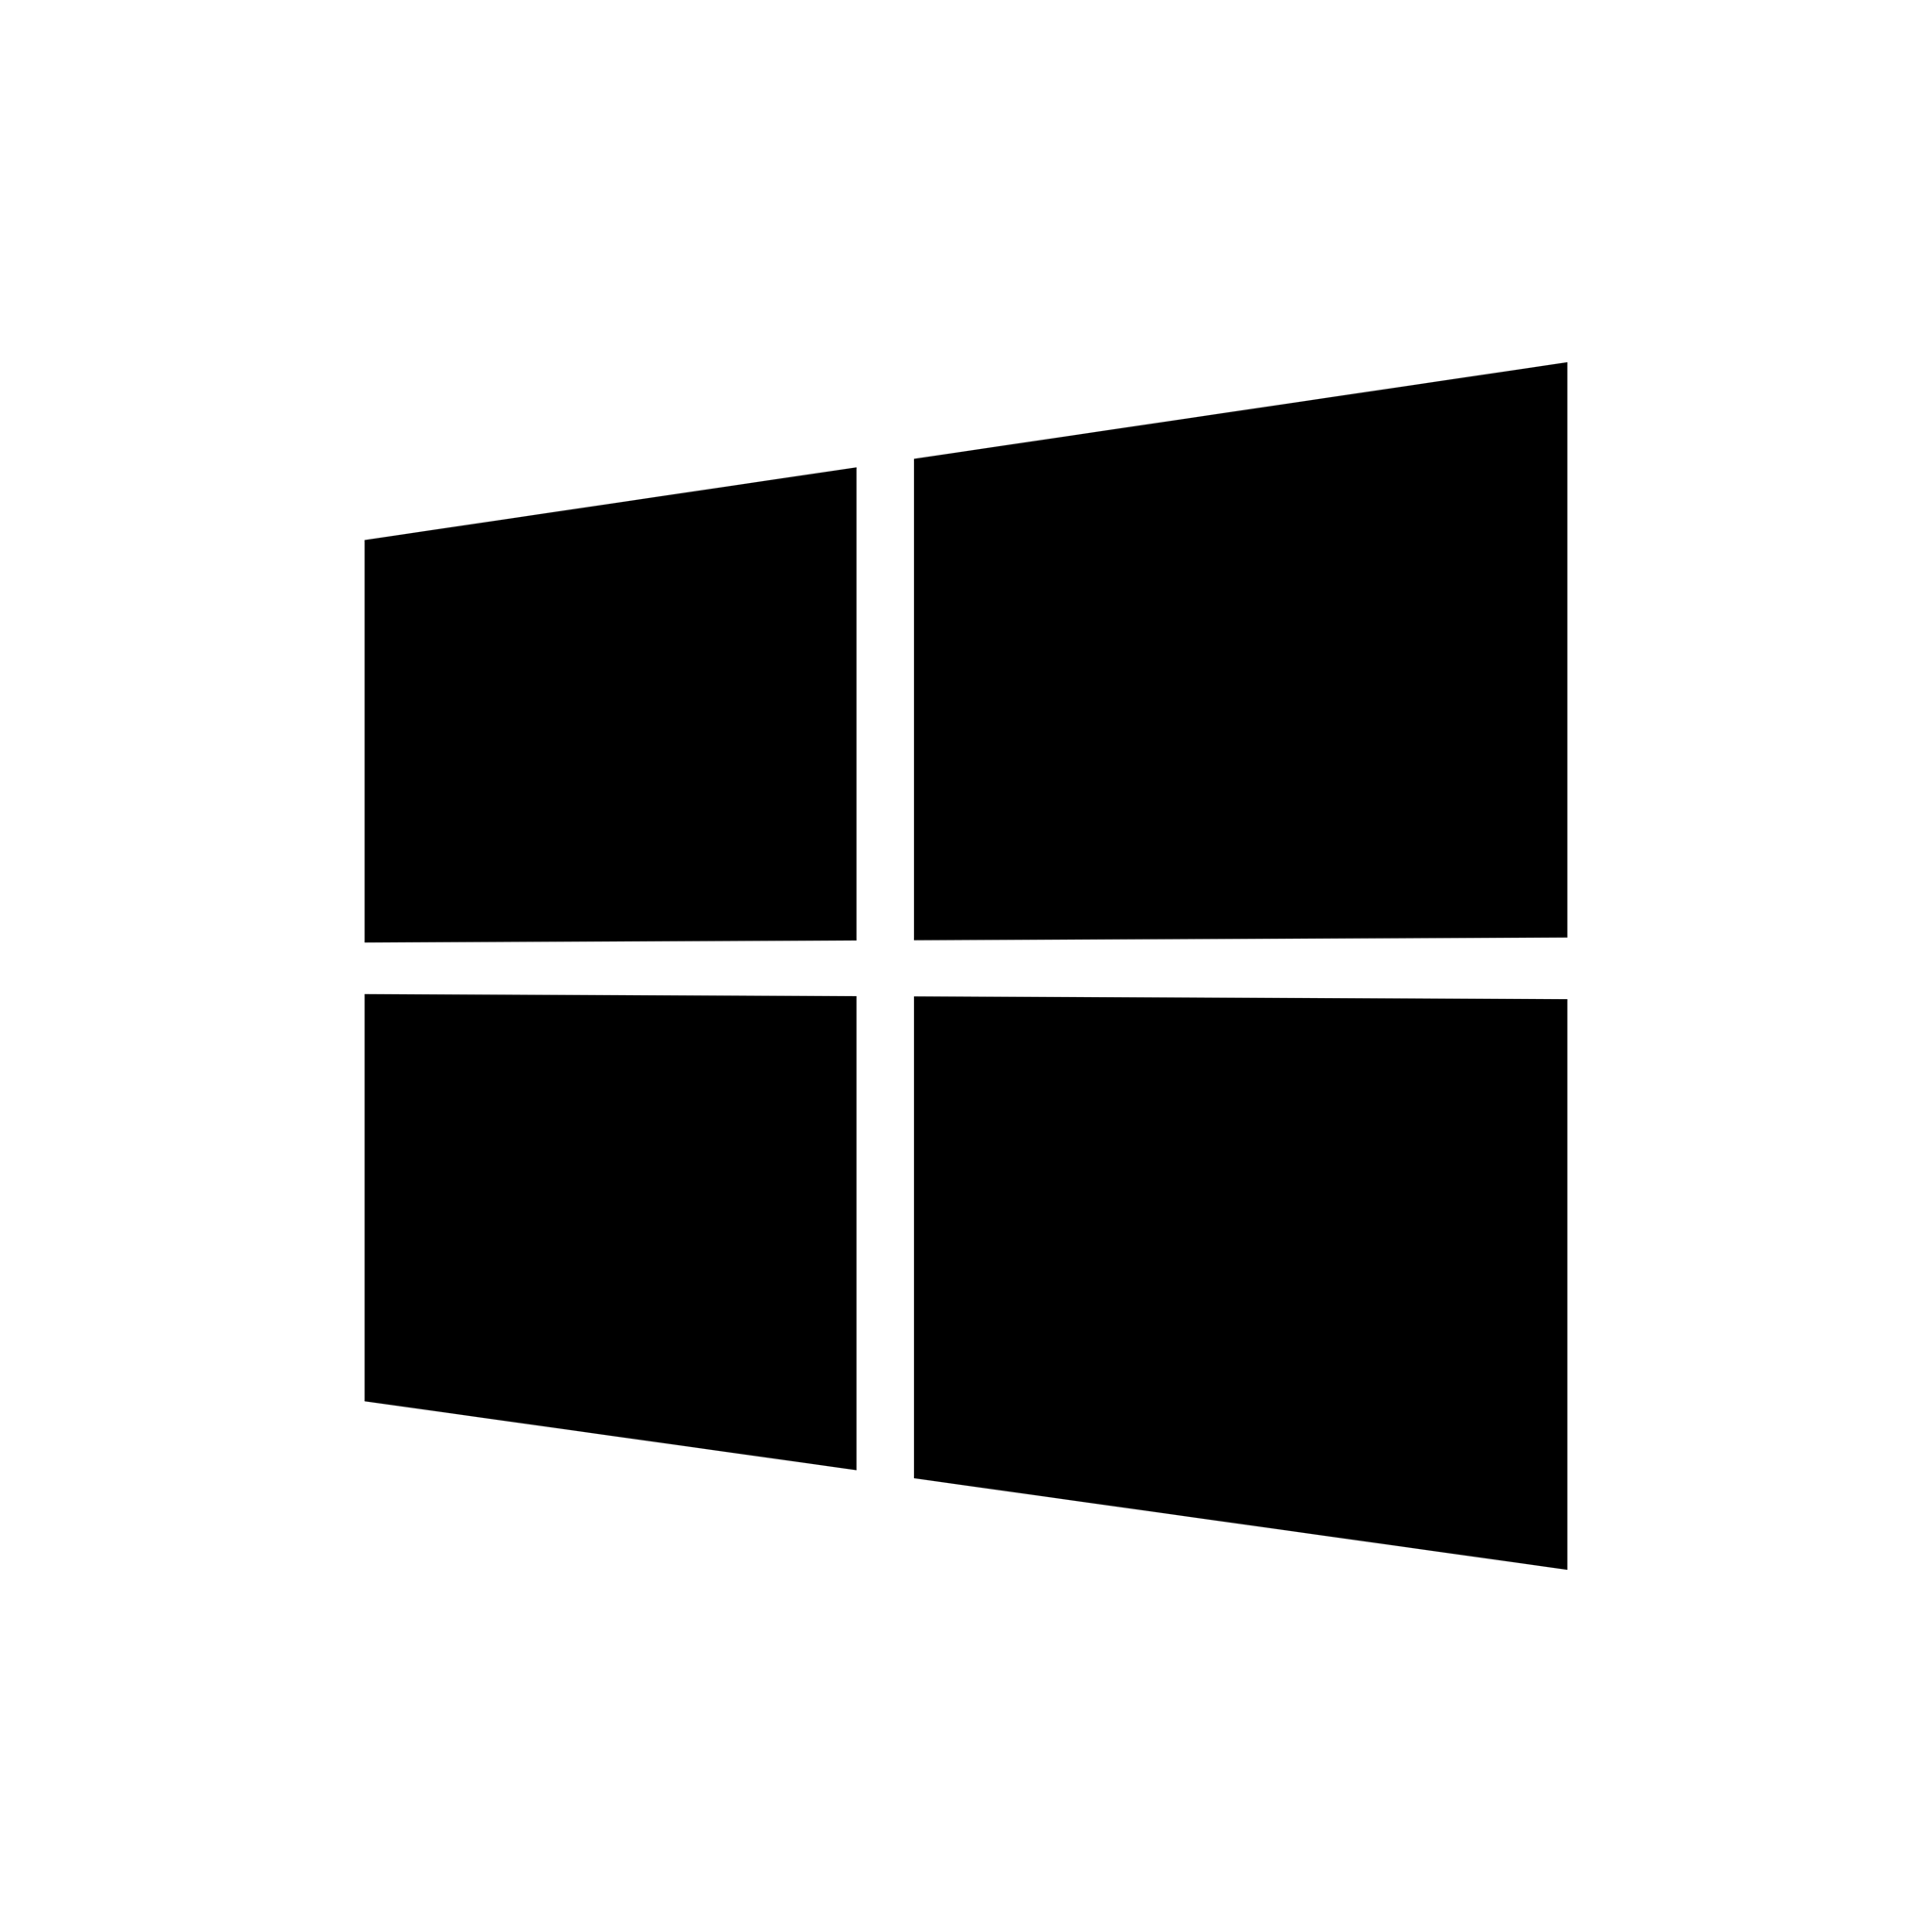 BSR Screen Recorder logo